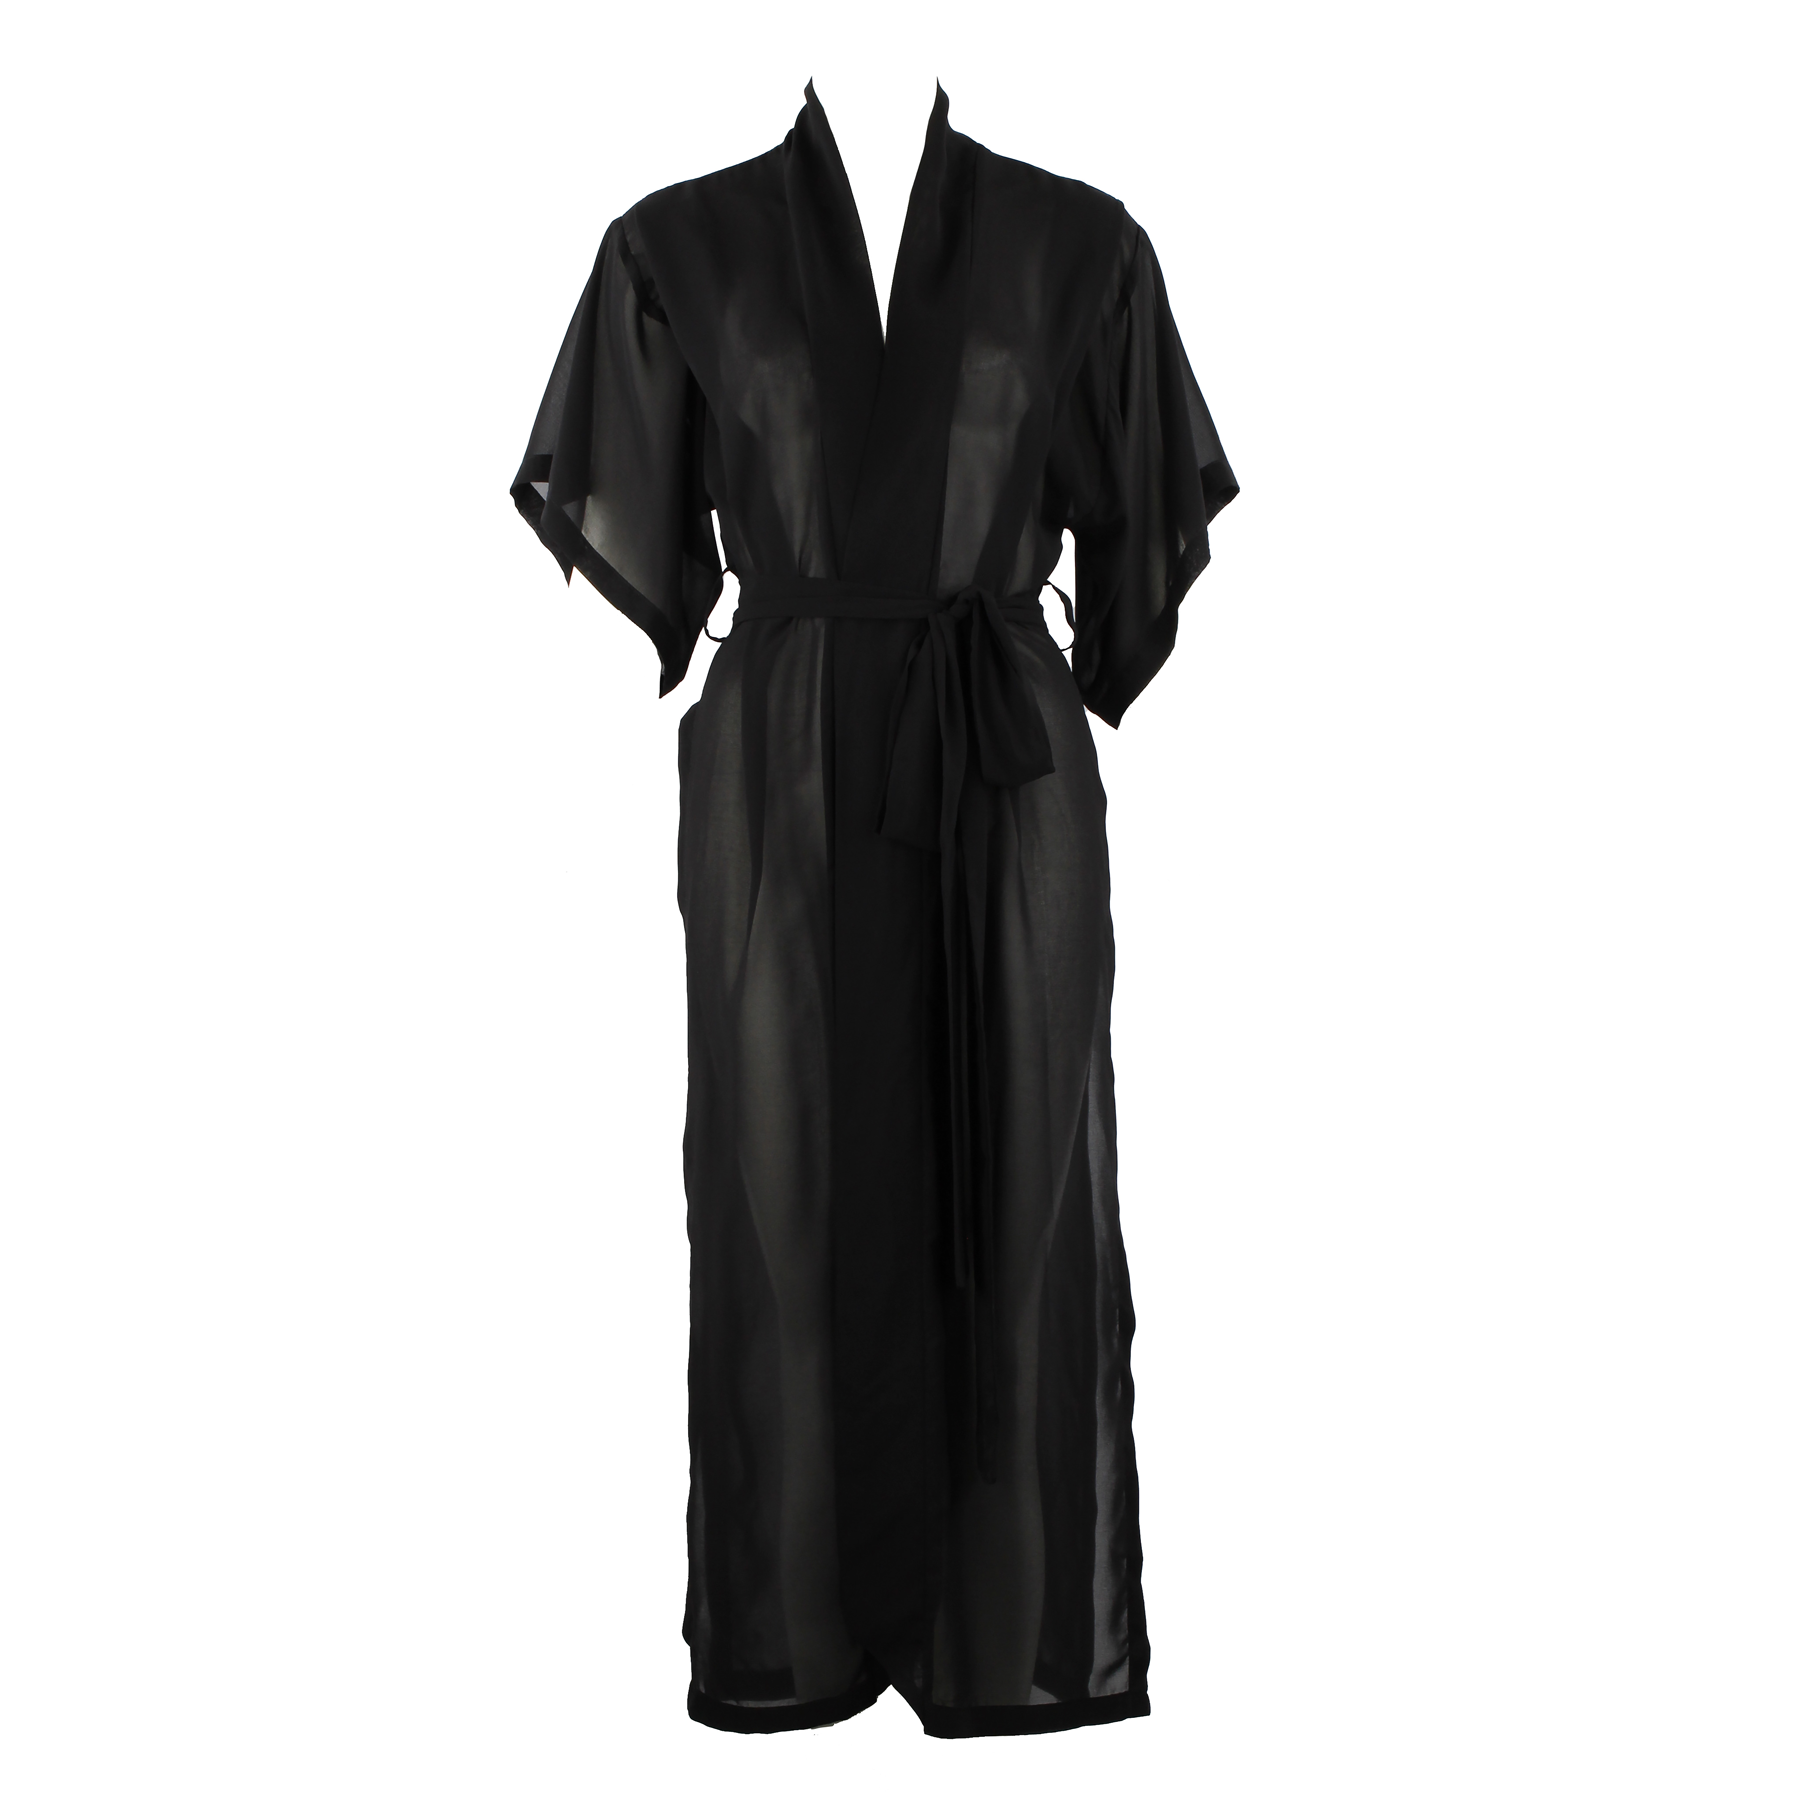 Hishi split robe dress - sheer